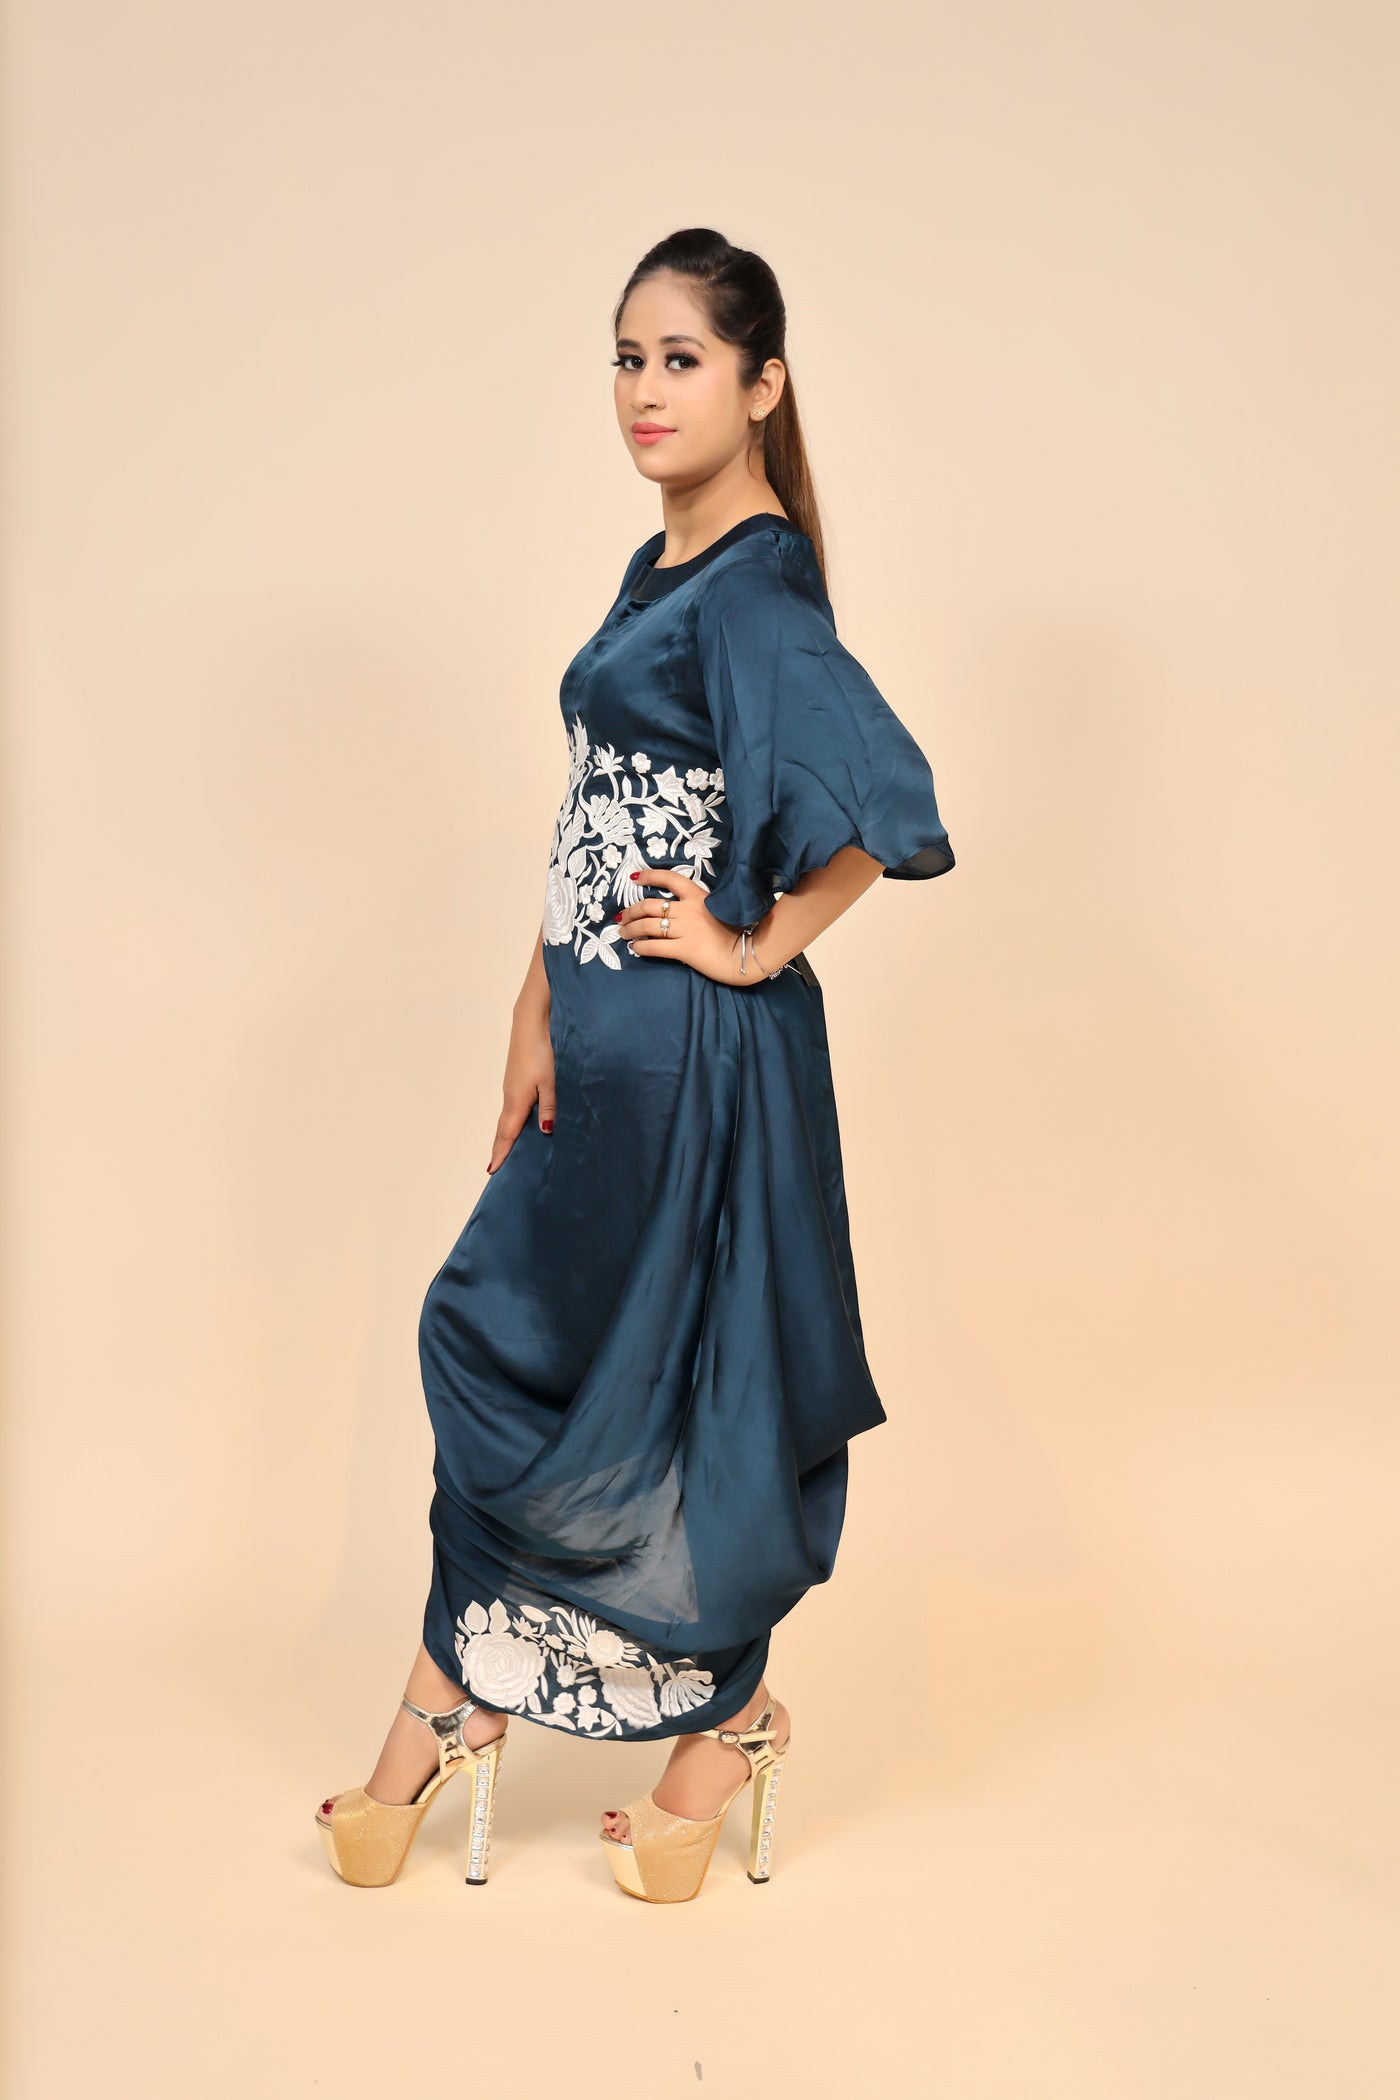 model posing wearing navy blue satin silk dress